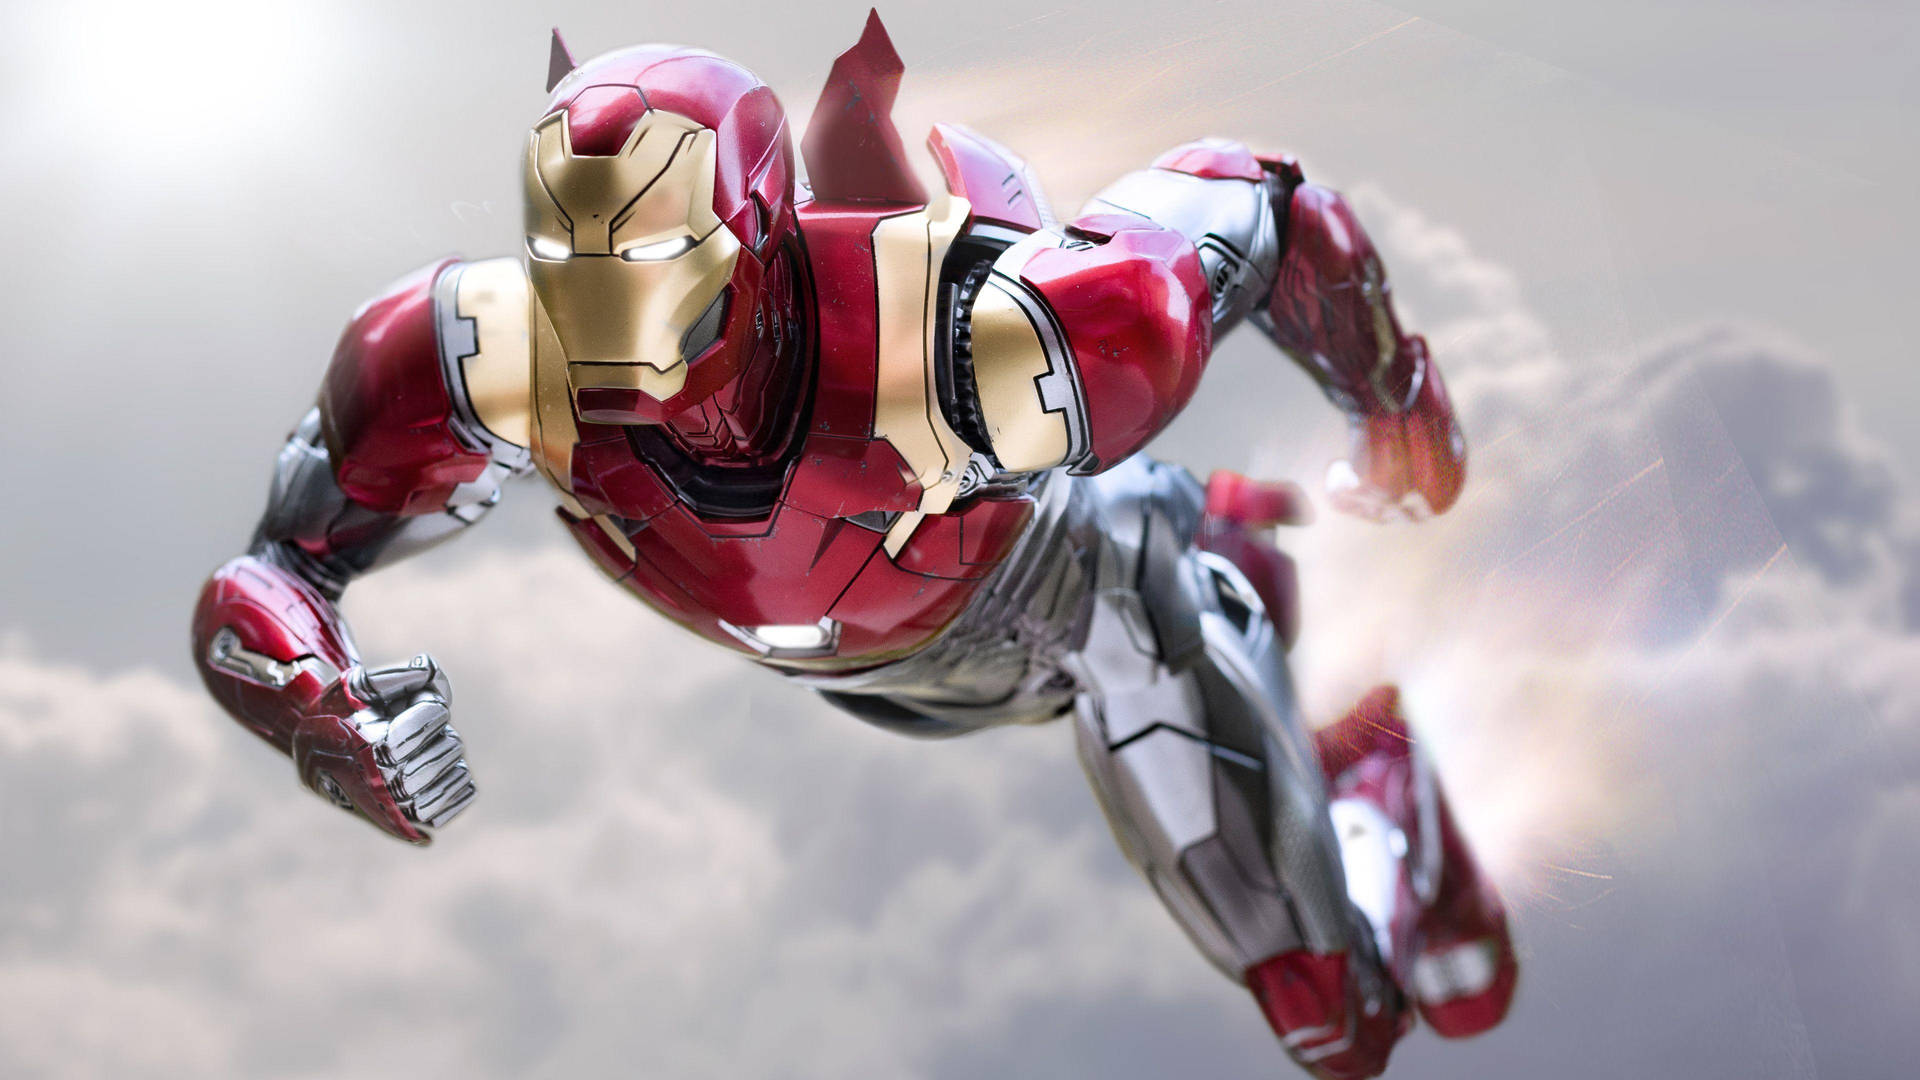 Iron Man HD Wallpaper | Iron man pictures, Iron man avengers, Iron man hd  wallpaper